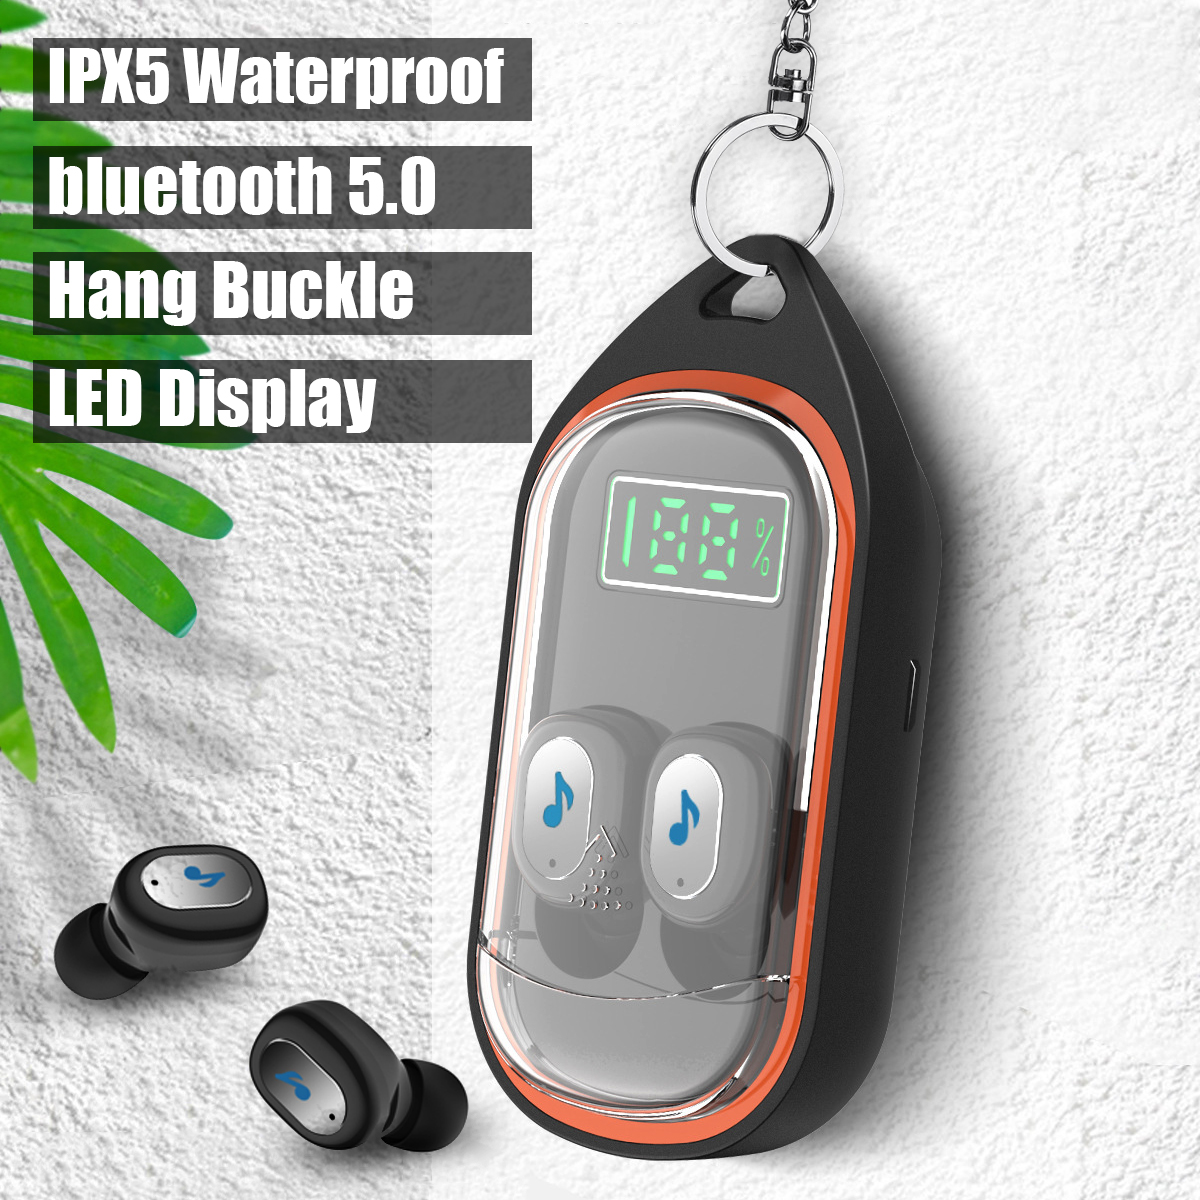 Wireless-Stereo-bluetooth-50-Earphone-Auto-Pair-IPX5-Waterproof-TWS-Headphone-with-Hang-Buckle-1562596-1